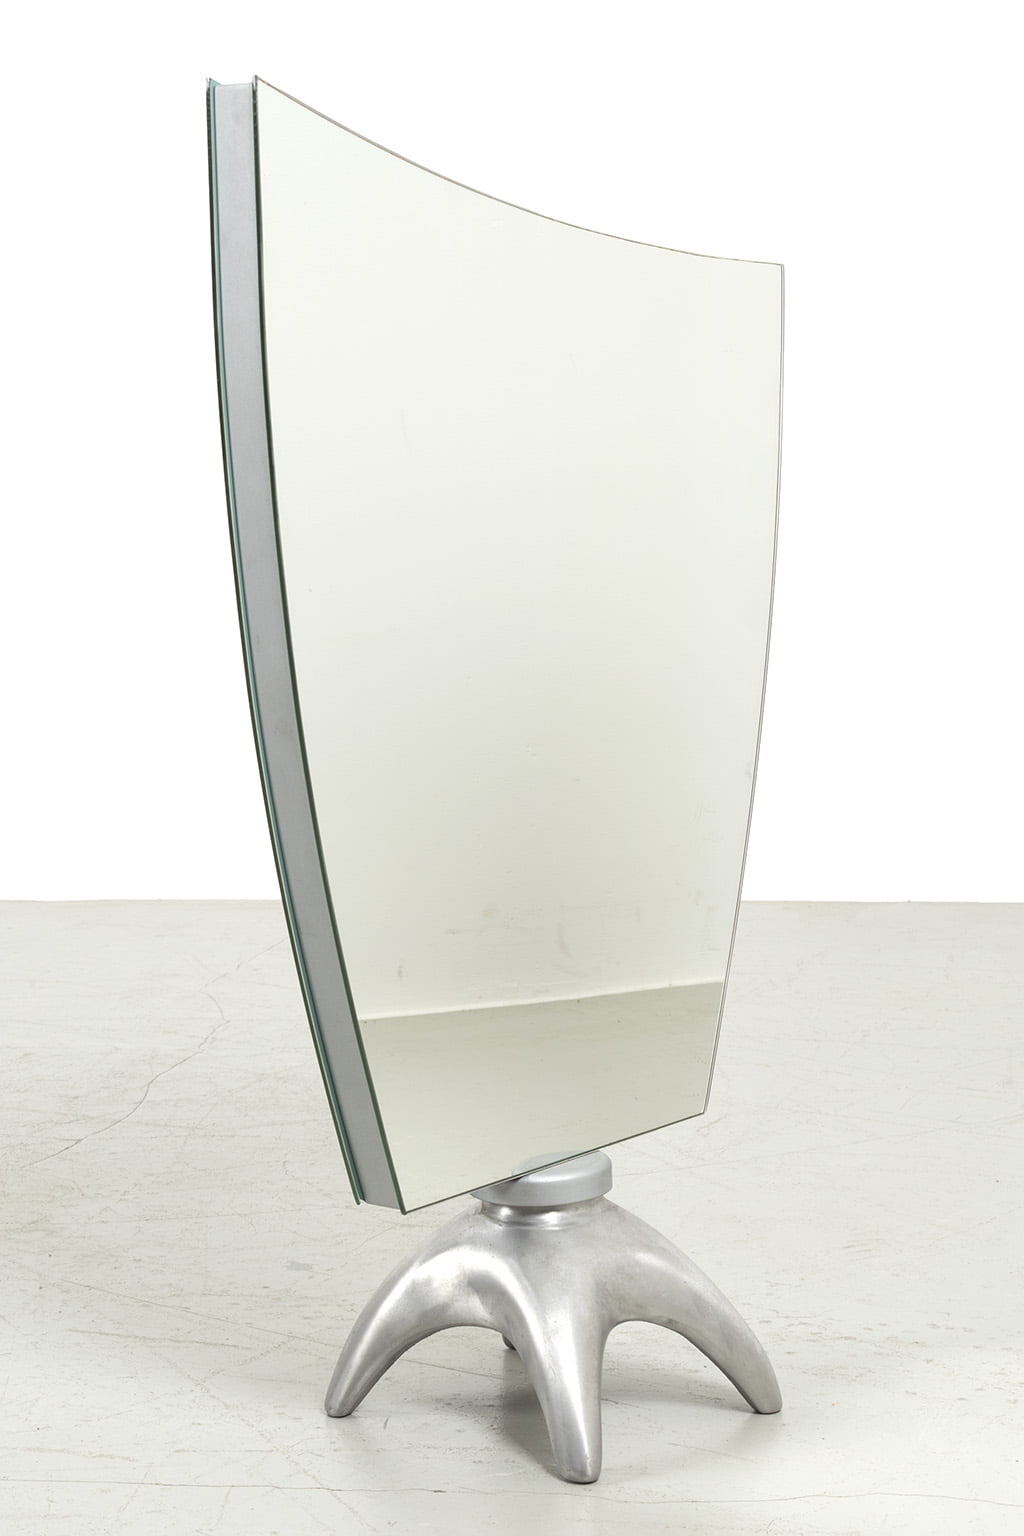 Rotatable table mirror